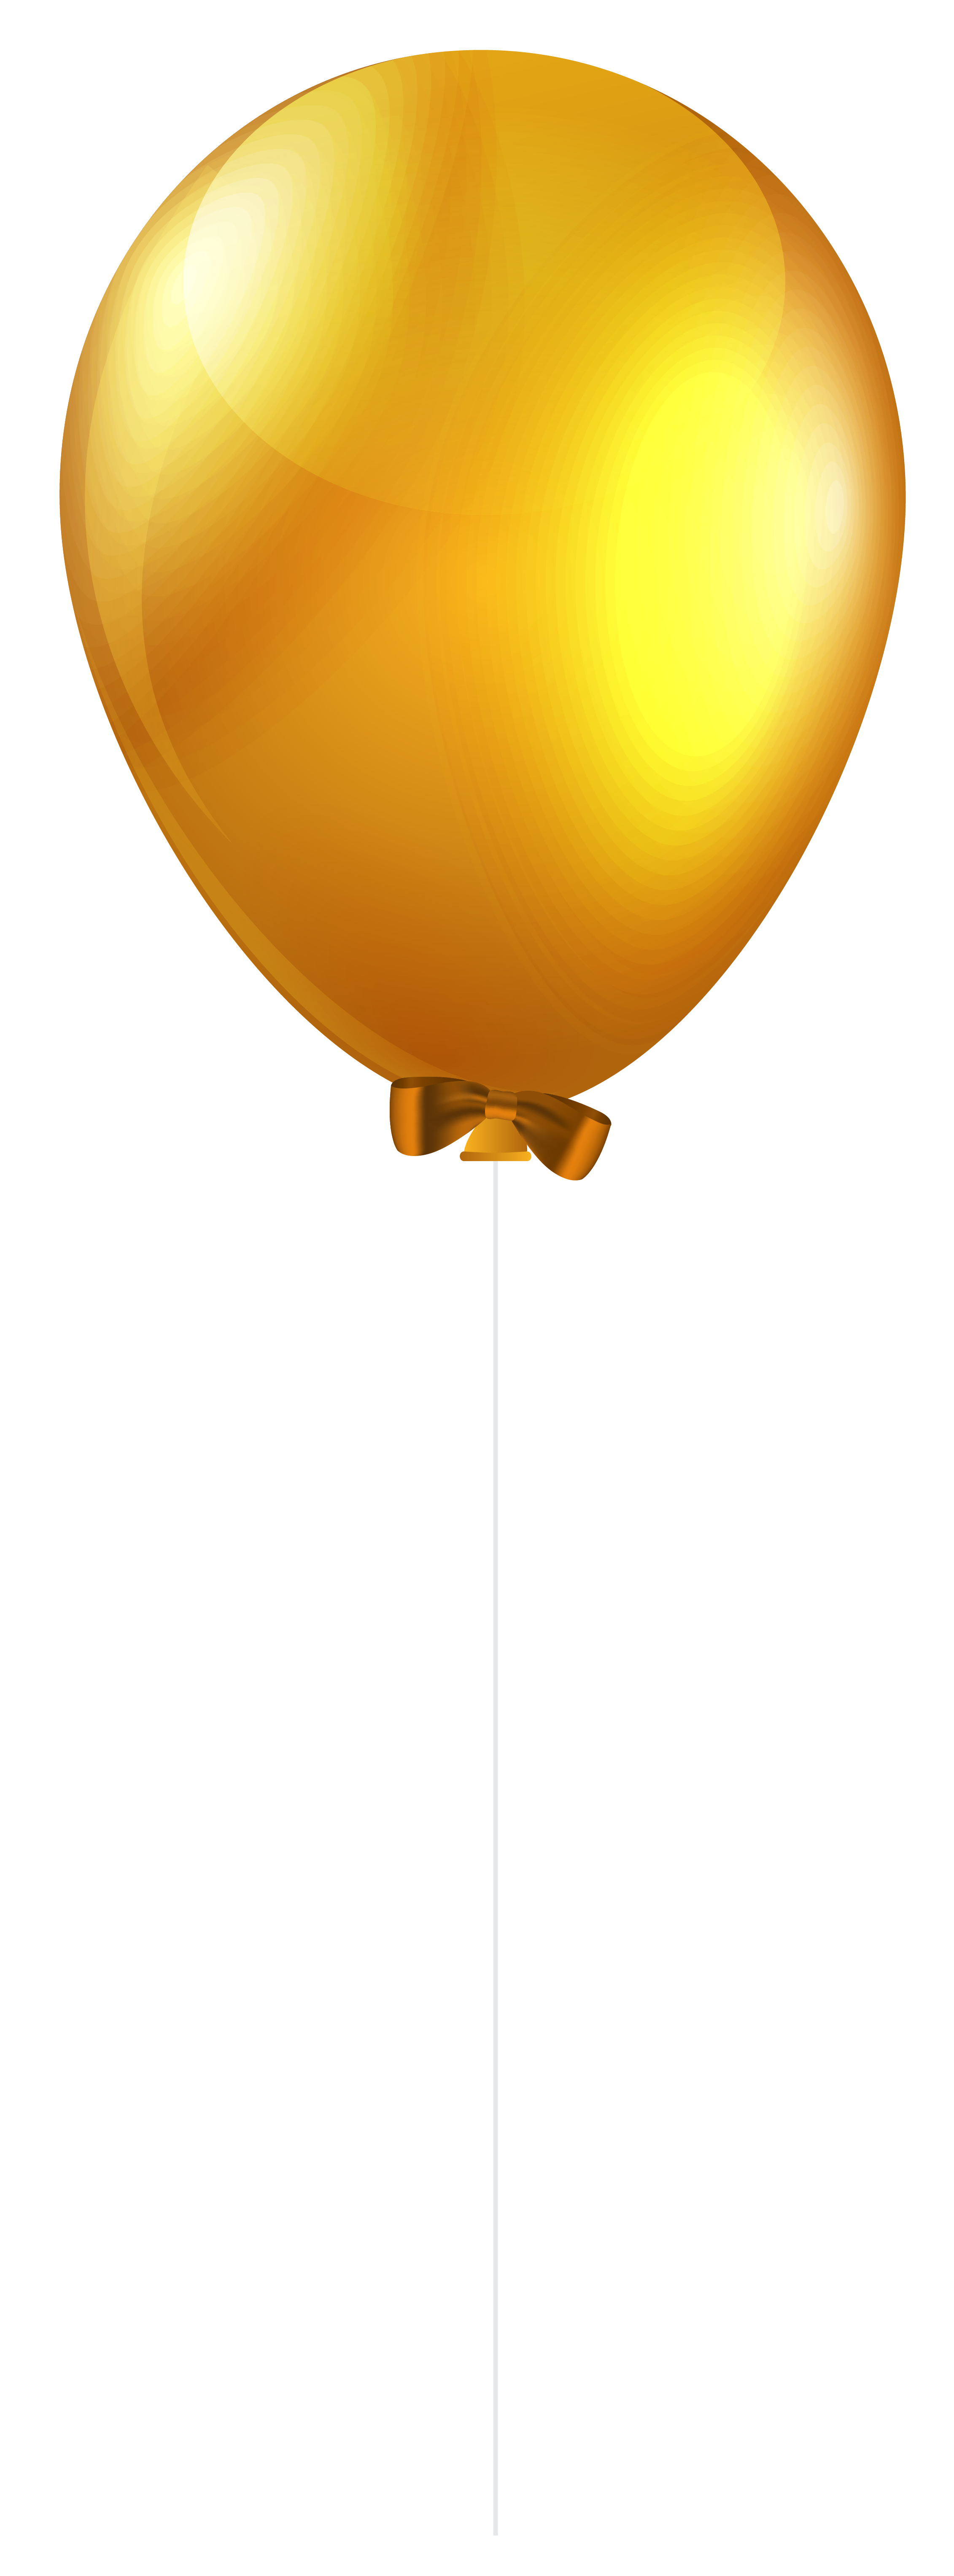 clip art single balloon - photo #24